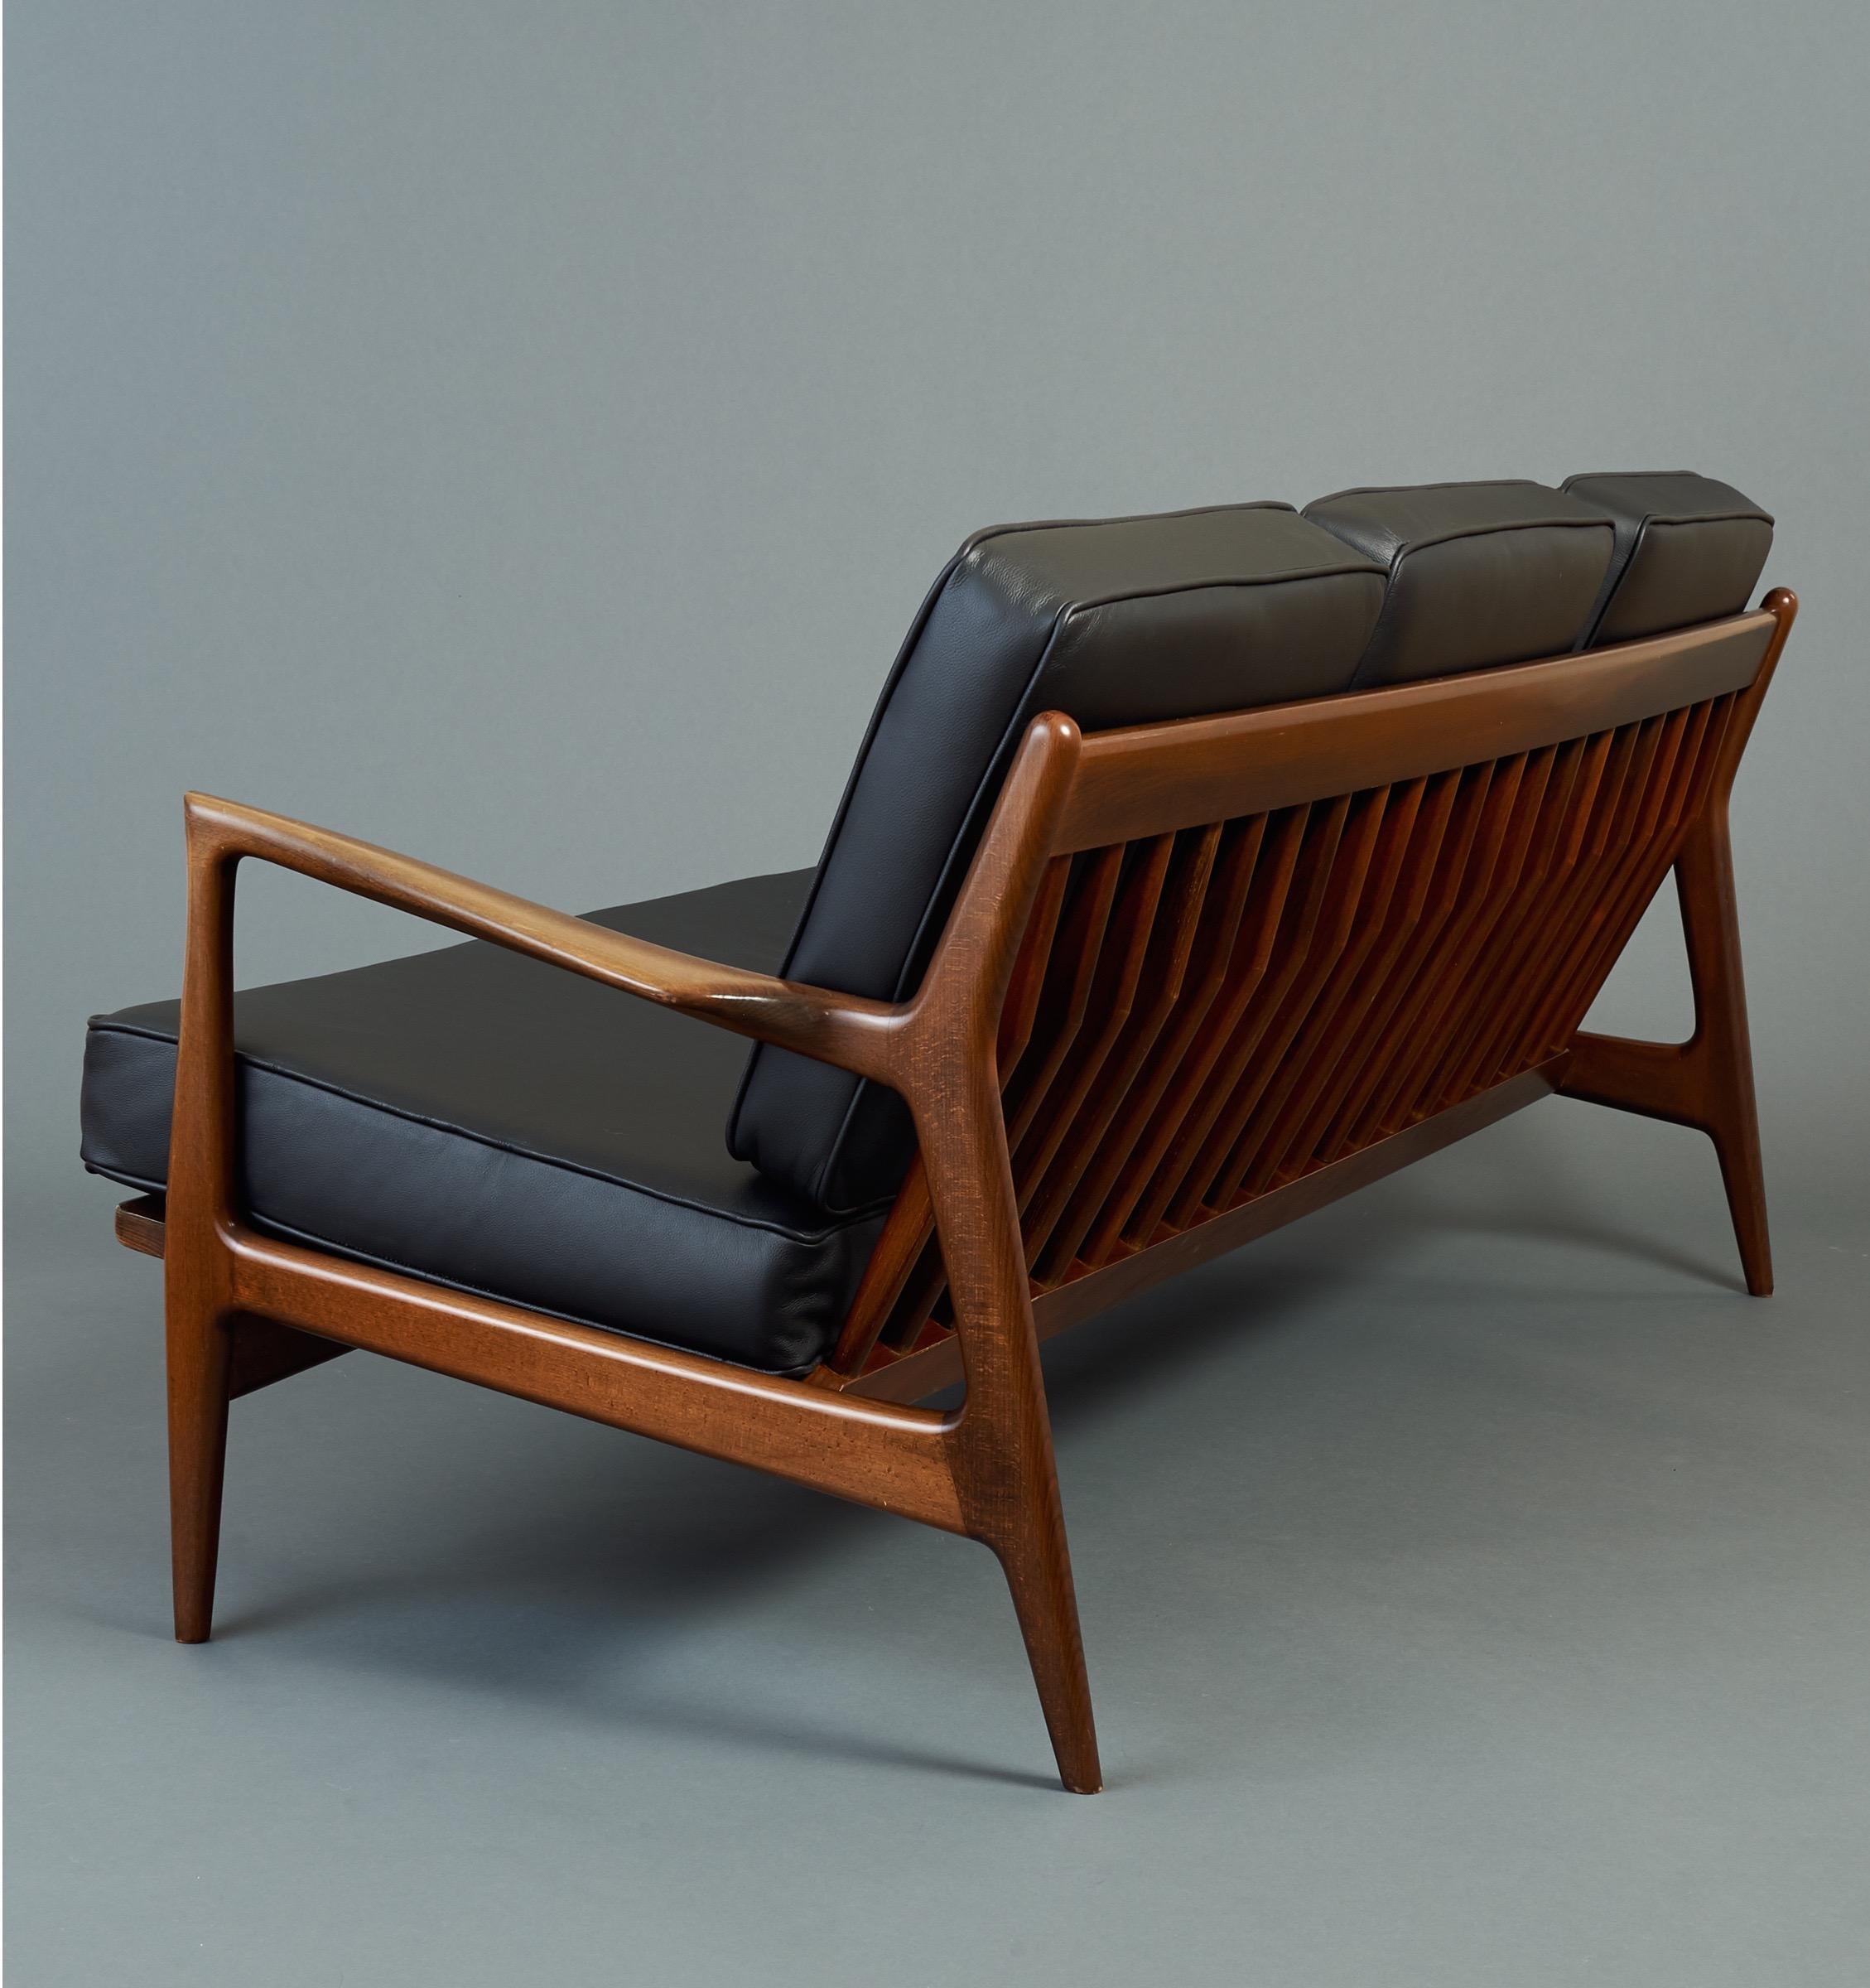 Mid-Century Modern Sleek Danish Modern Sofa by Ib Kofod-Larsen in Teak and Black Leather, 1950s For Sale